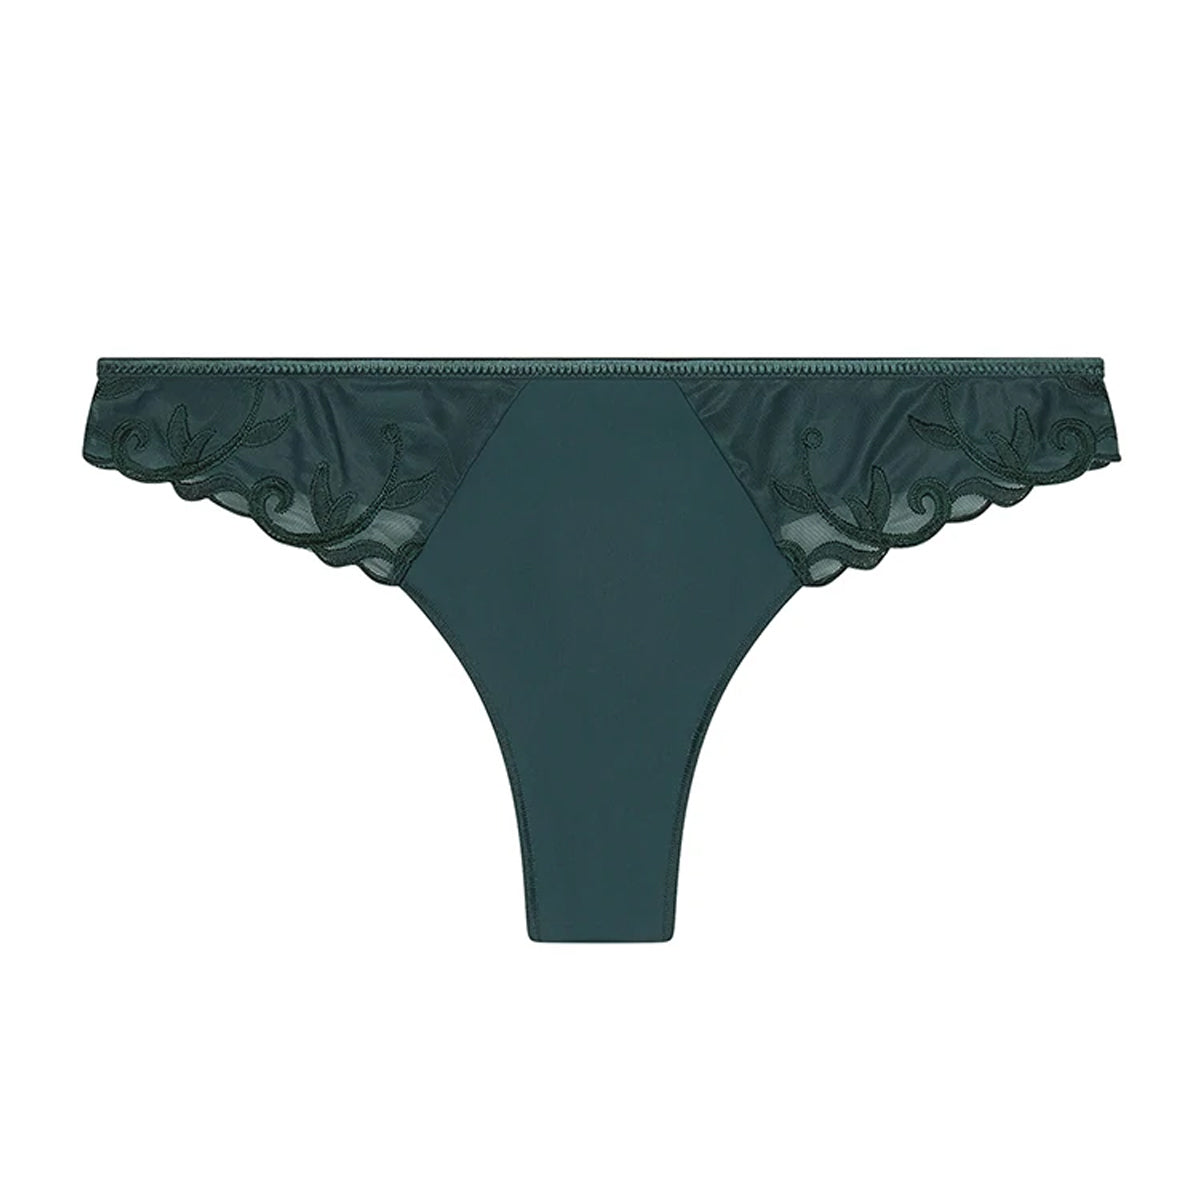 ZITIQUE Women's Autumn-winter Glossy Non-wired Push Up Lingerie Set (Bra  and Underwear) - Green 2024, Buy ZITIQUE Online